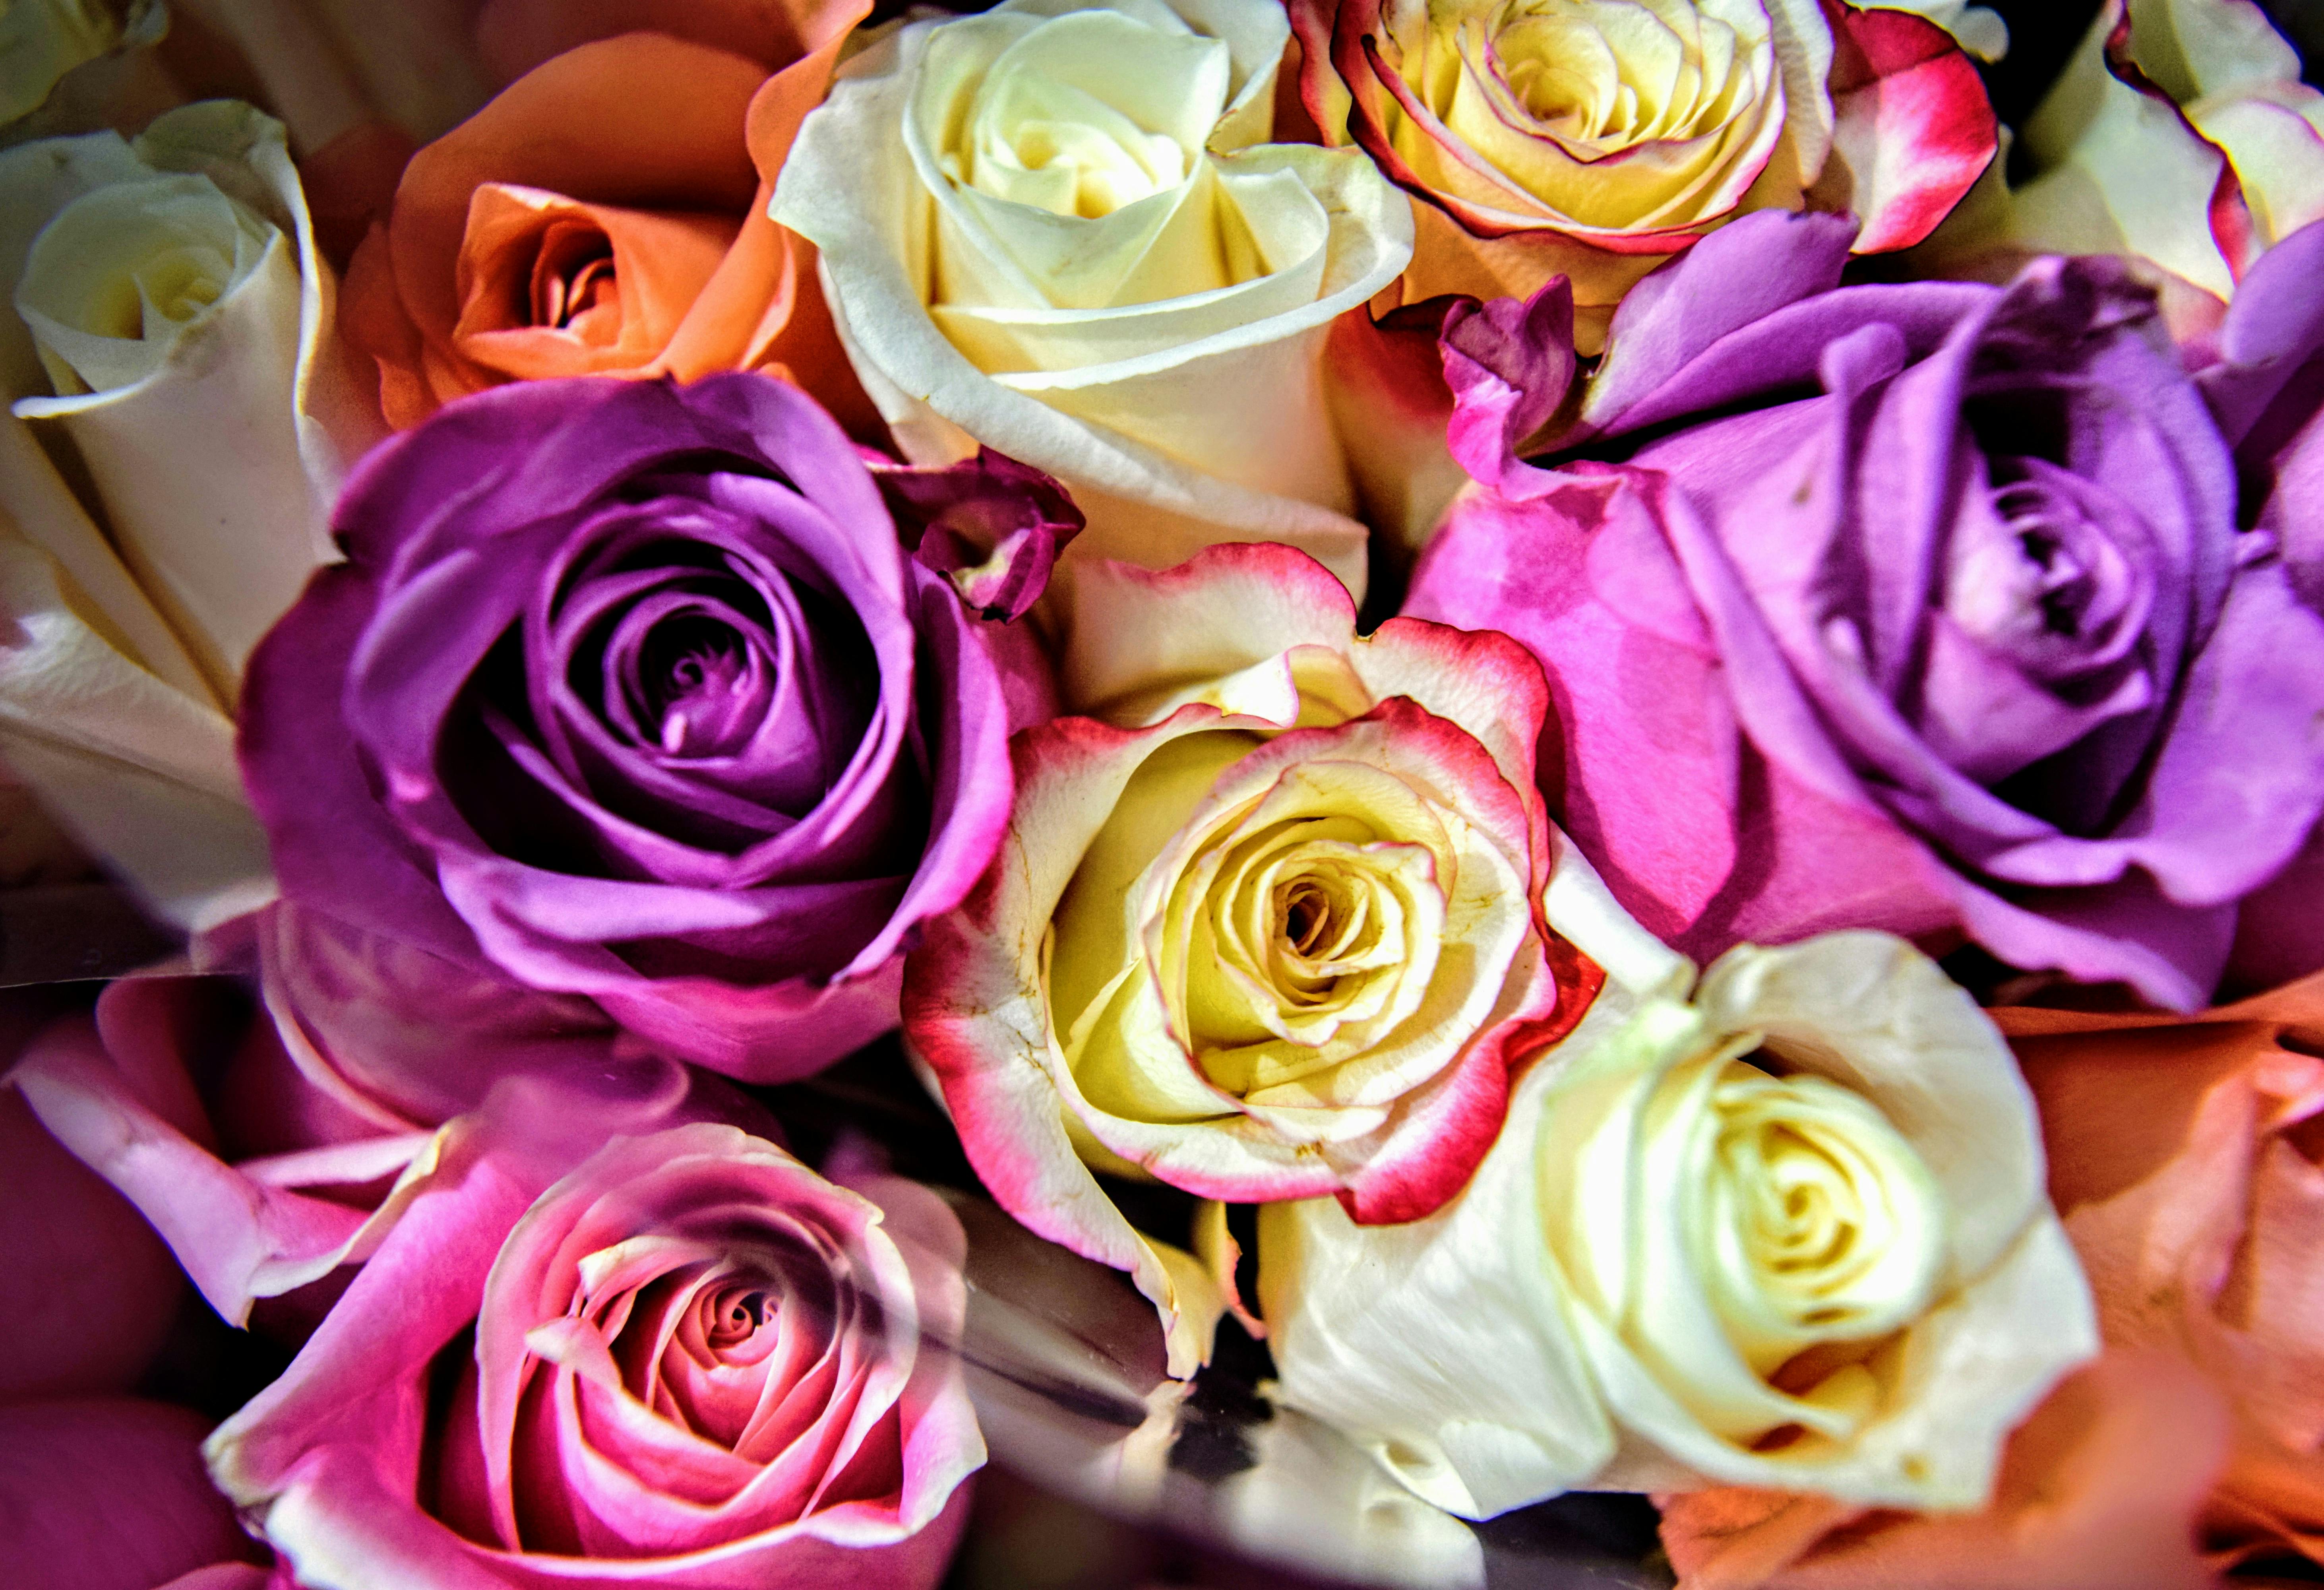 Free stock photo of amber lamoreaux, Purple roses, rose bouquet